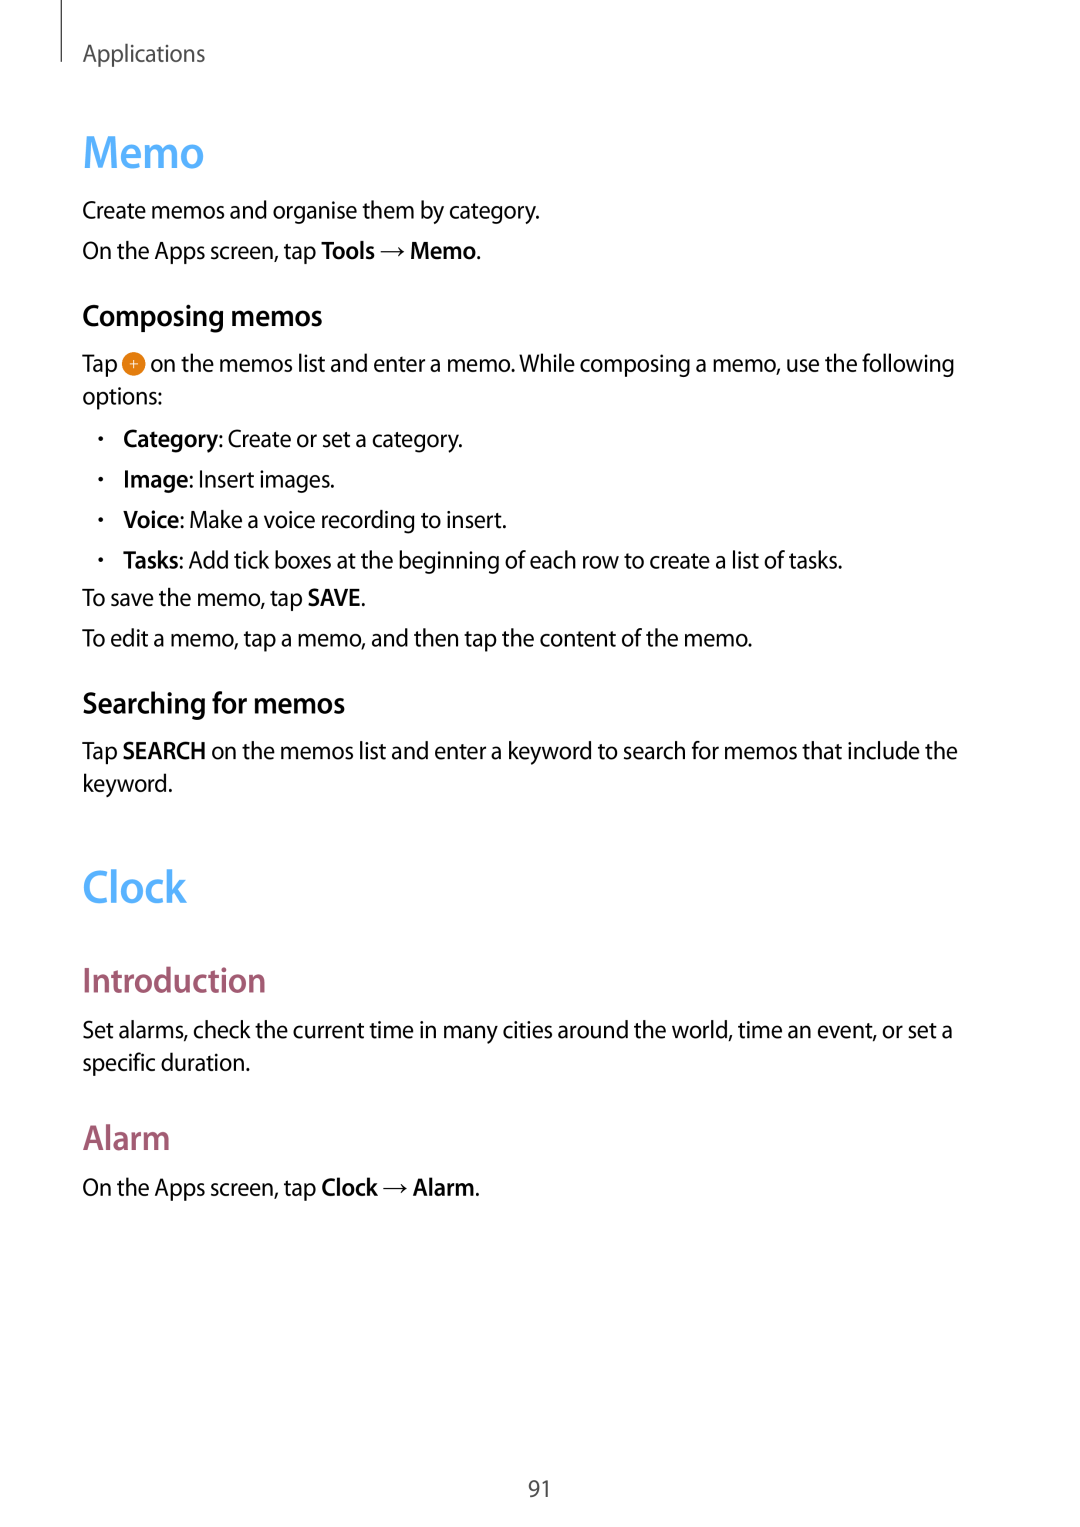 Samsung SM-G920IZKEKSA manual Memo, Clock, Alarm, Composing memos, Searching for memos, Introduction, Applications 